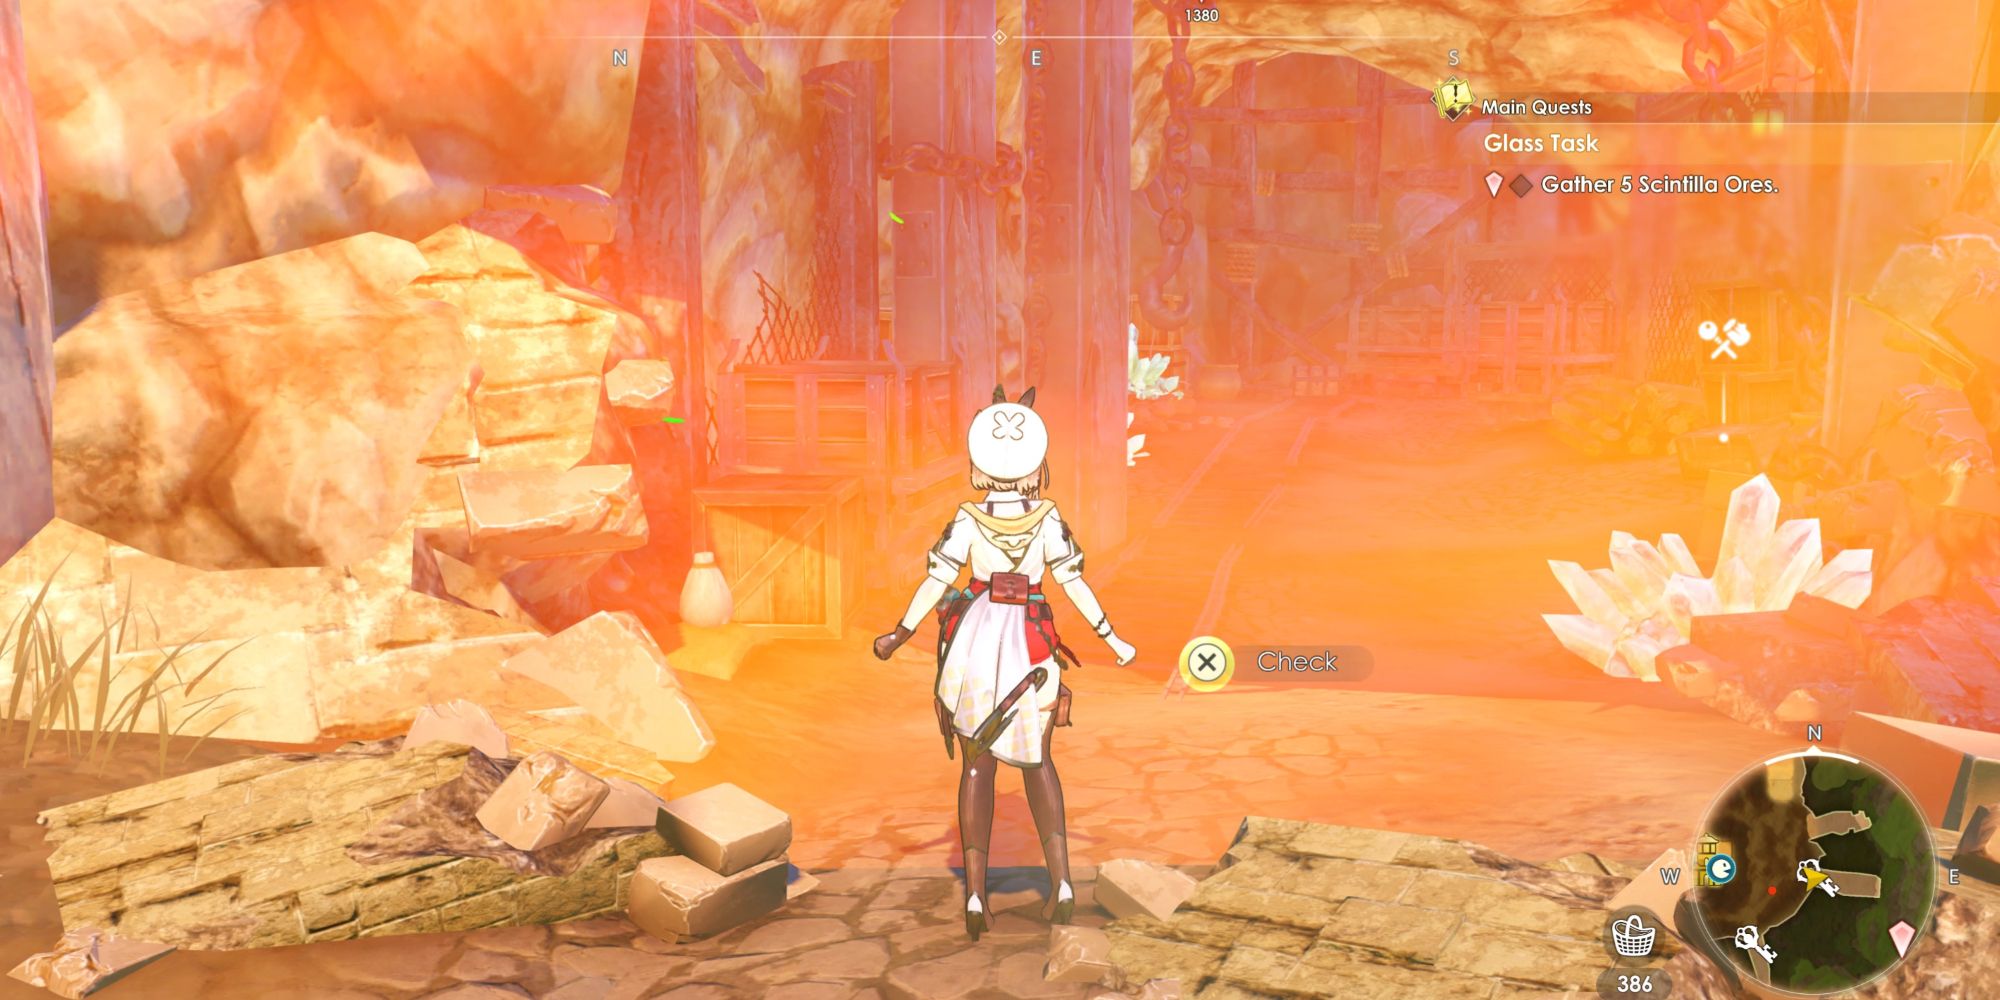 A Fire Elemental Gate blocking Ryza's way in Atelier Ryza 3: Alchemist of the End & the Secret Key